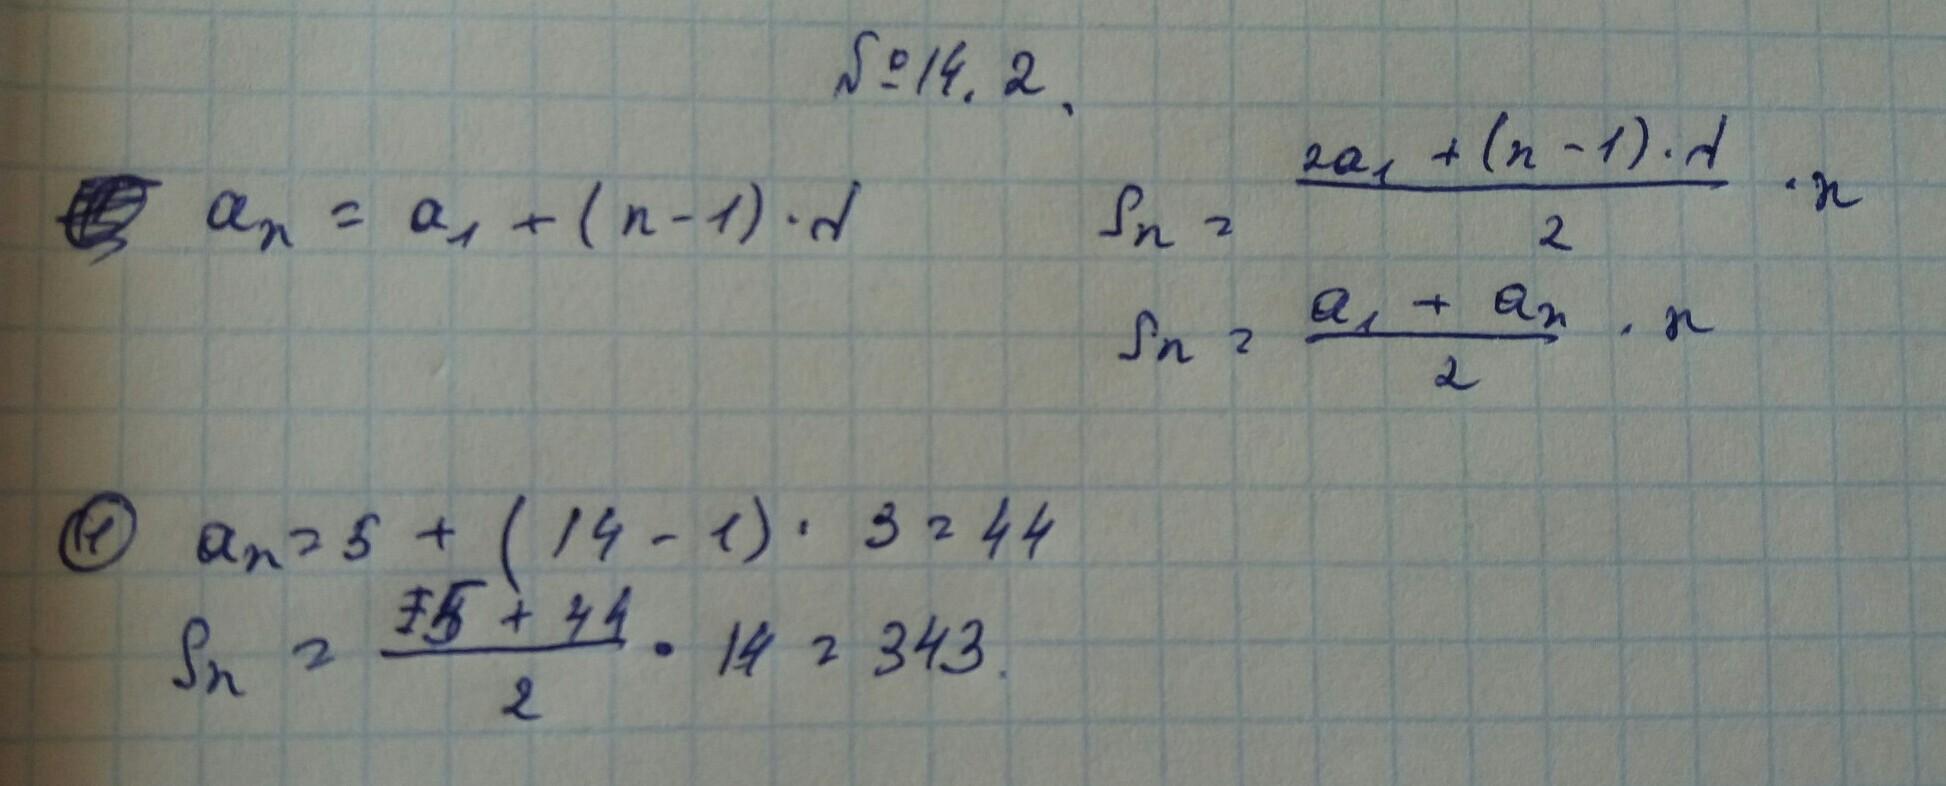 An 1 an 5 a1 8. SN a1 an /2 n; Найдите a1. Sn1. A1=14, , d=2 SN-?. Найдите s3n, если SN=24.